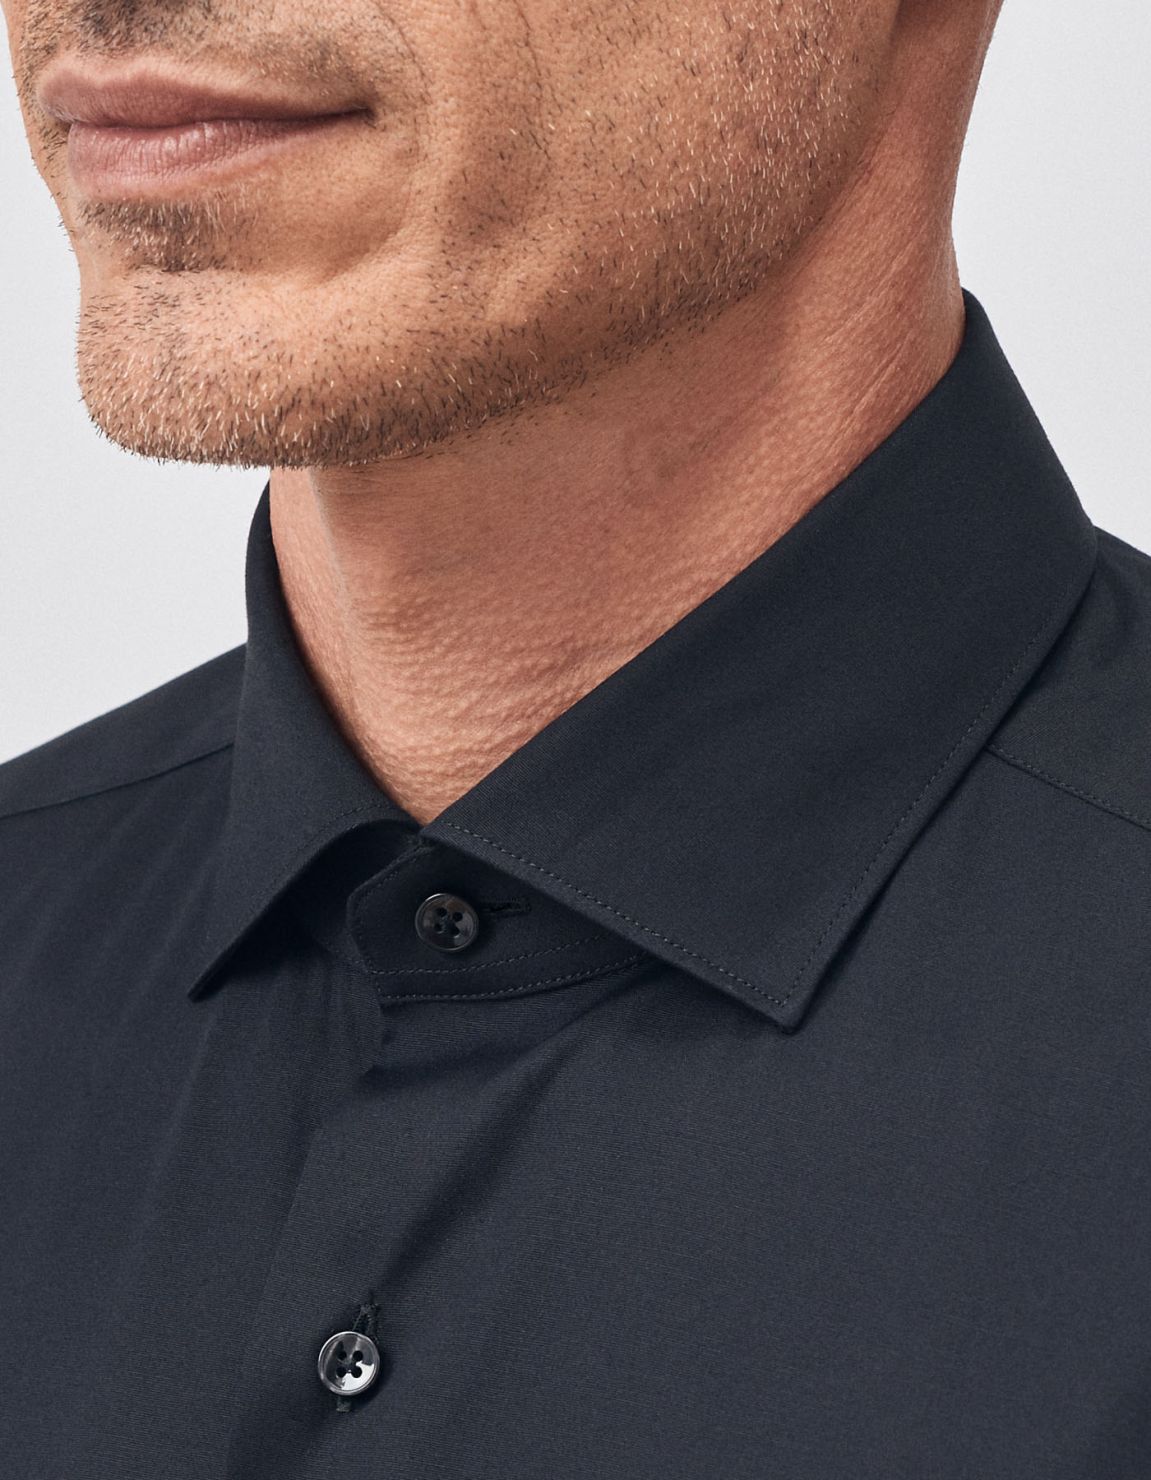 Shirt Collar small cutaway Black Canvas Tailor Custom Fit 3